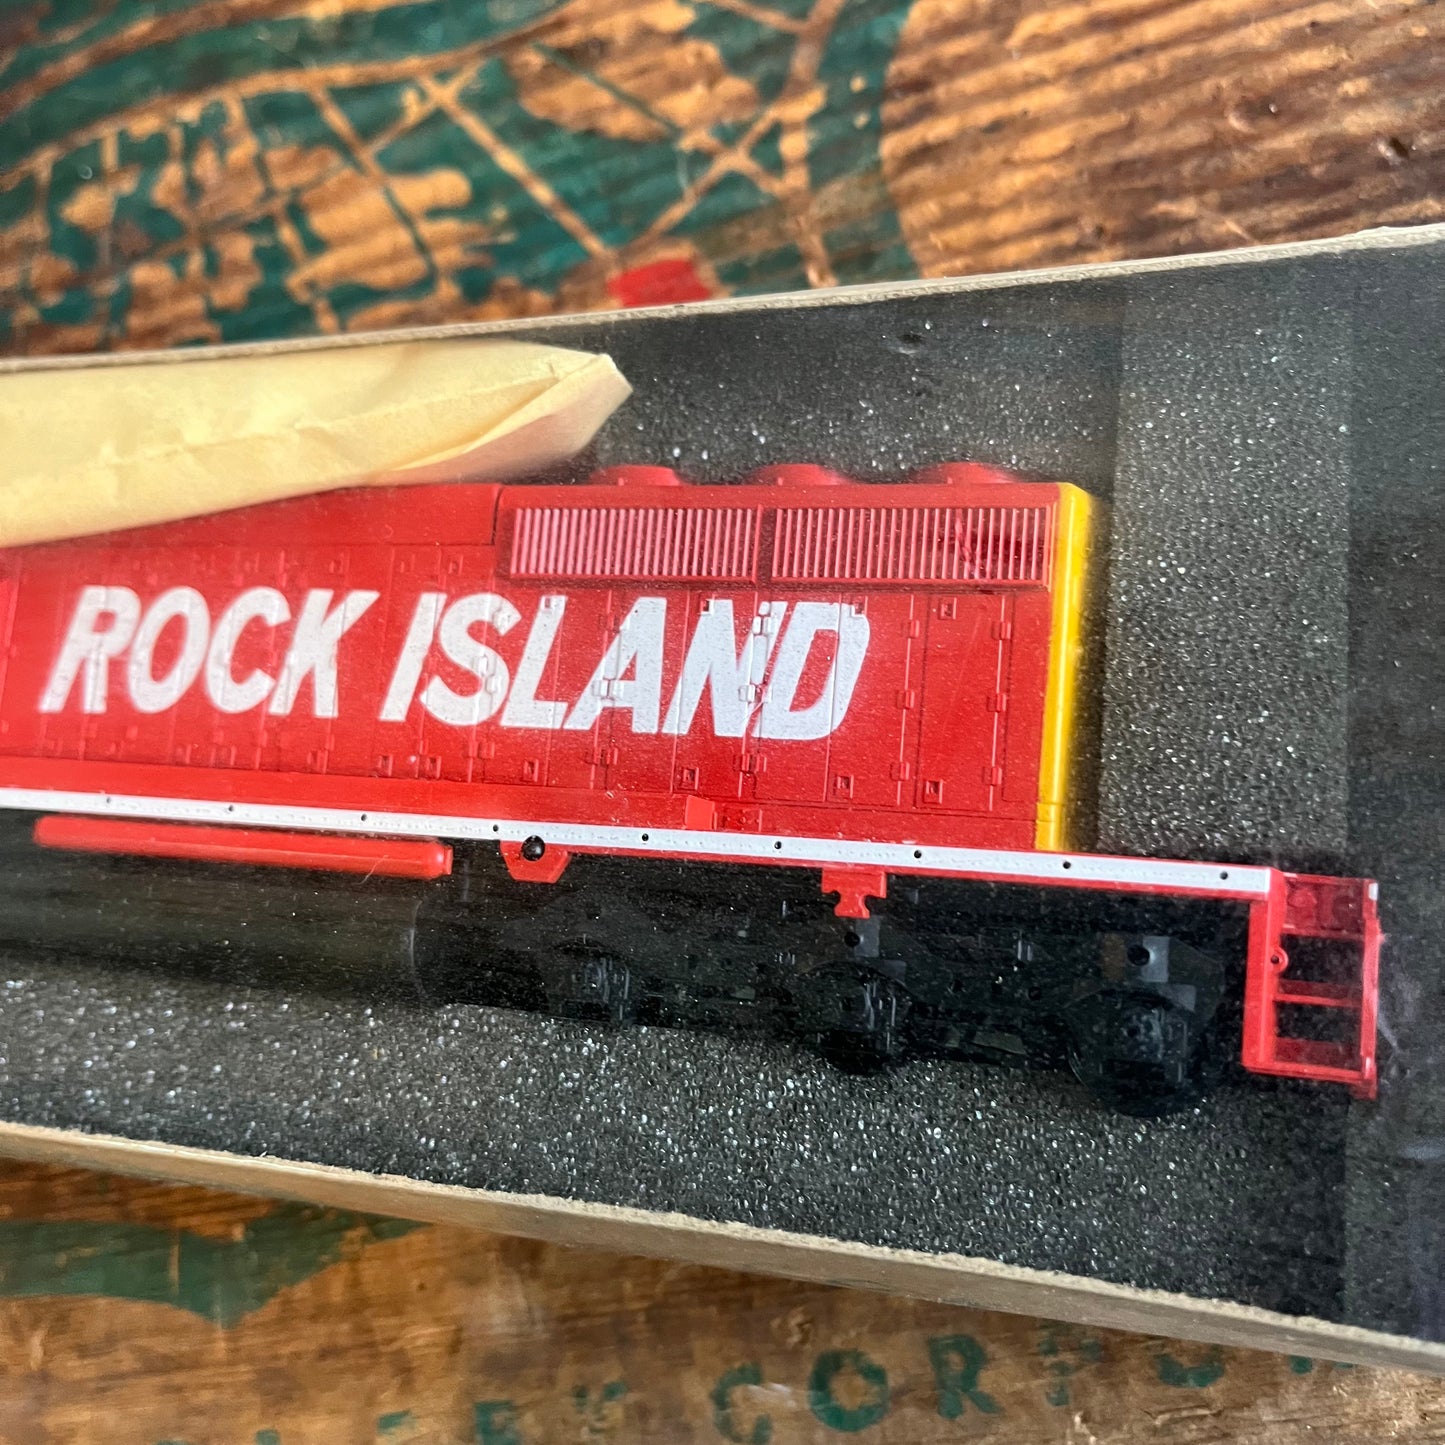 【USA vintage】Athearn 4460 ROCK ISLAND 蒸気機関車模型